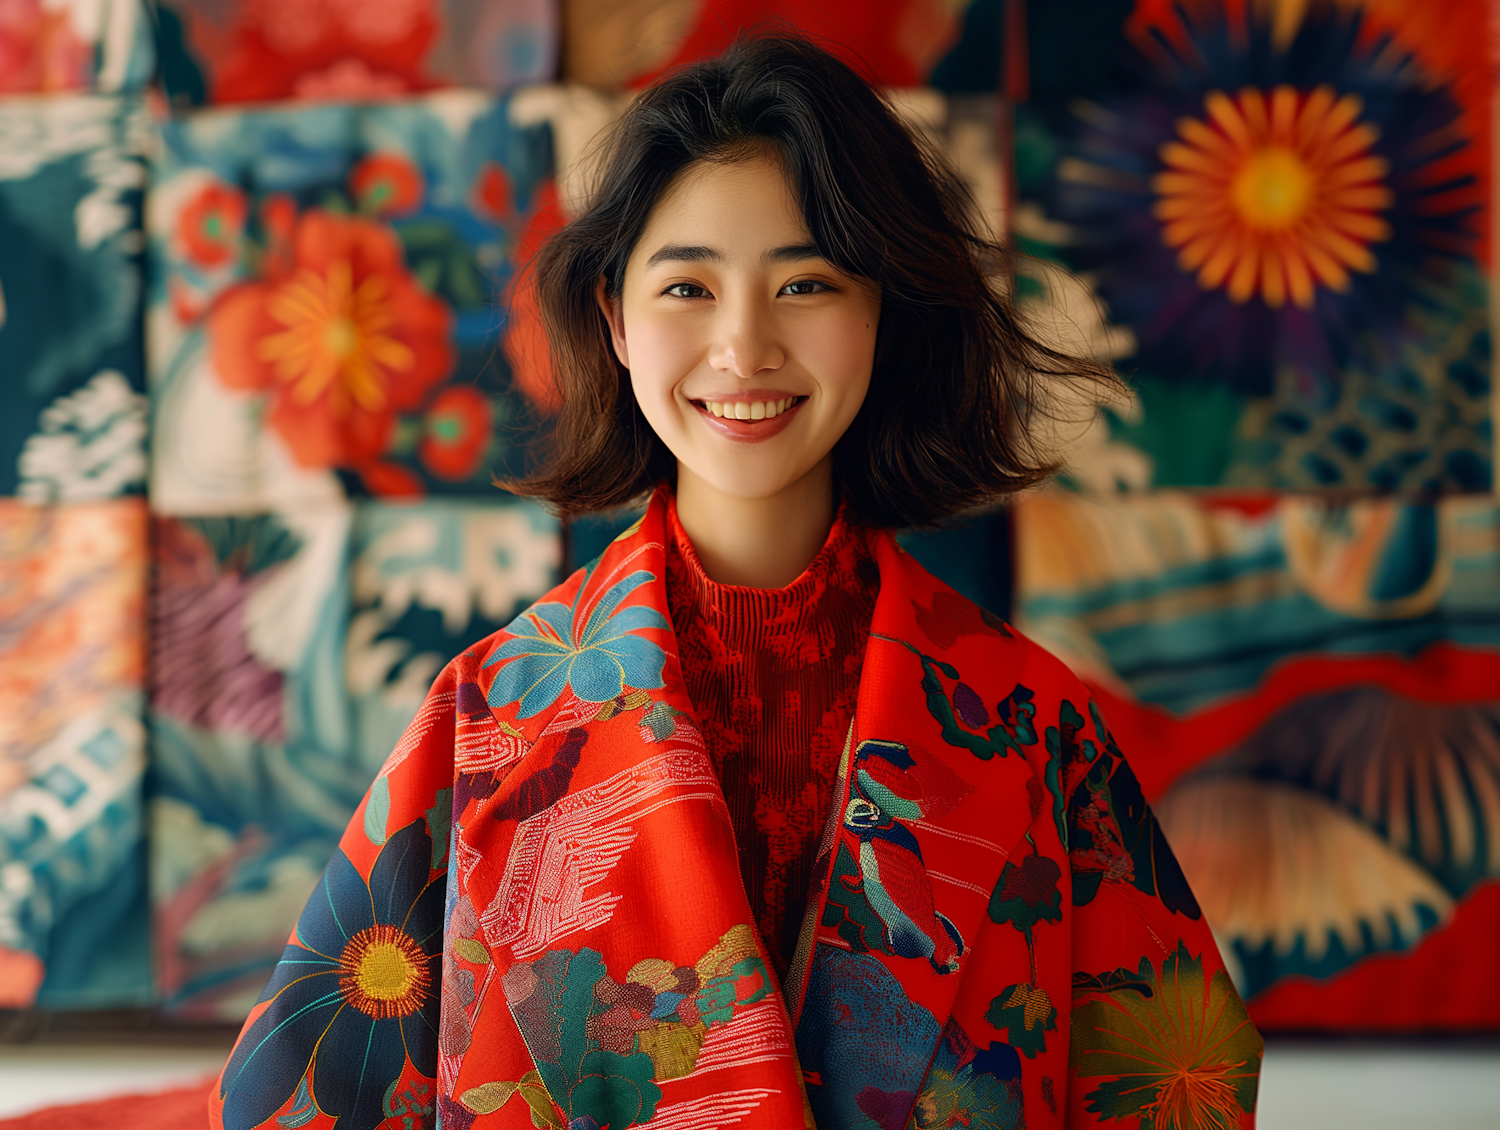 Joyful Woman in a Vibrant Kimono